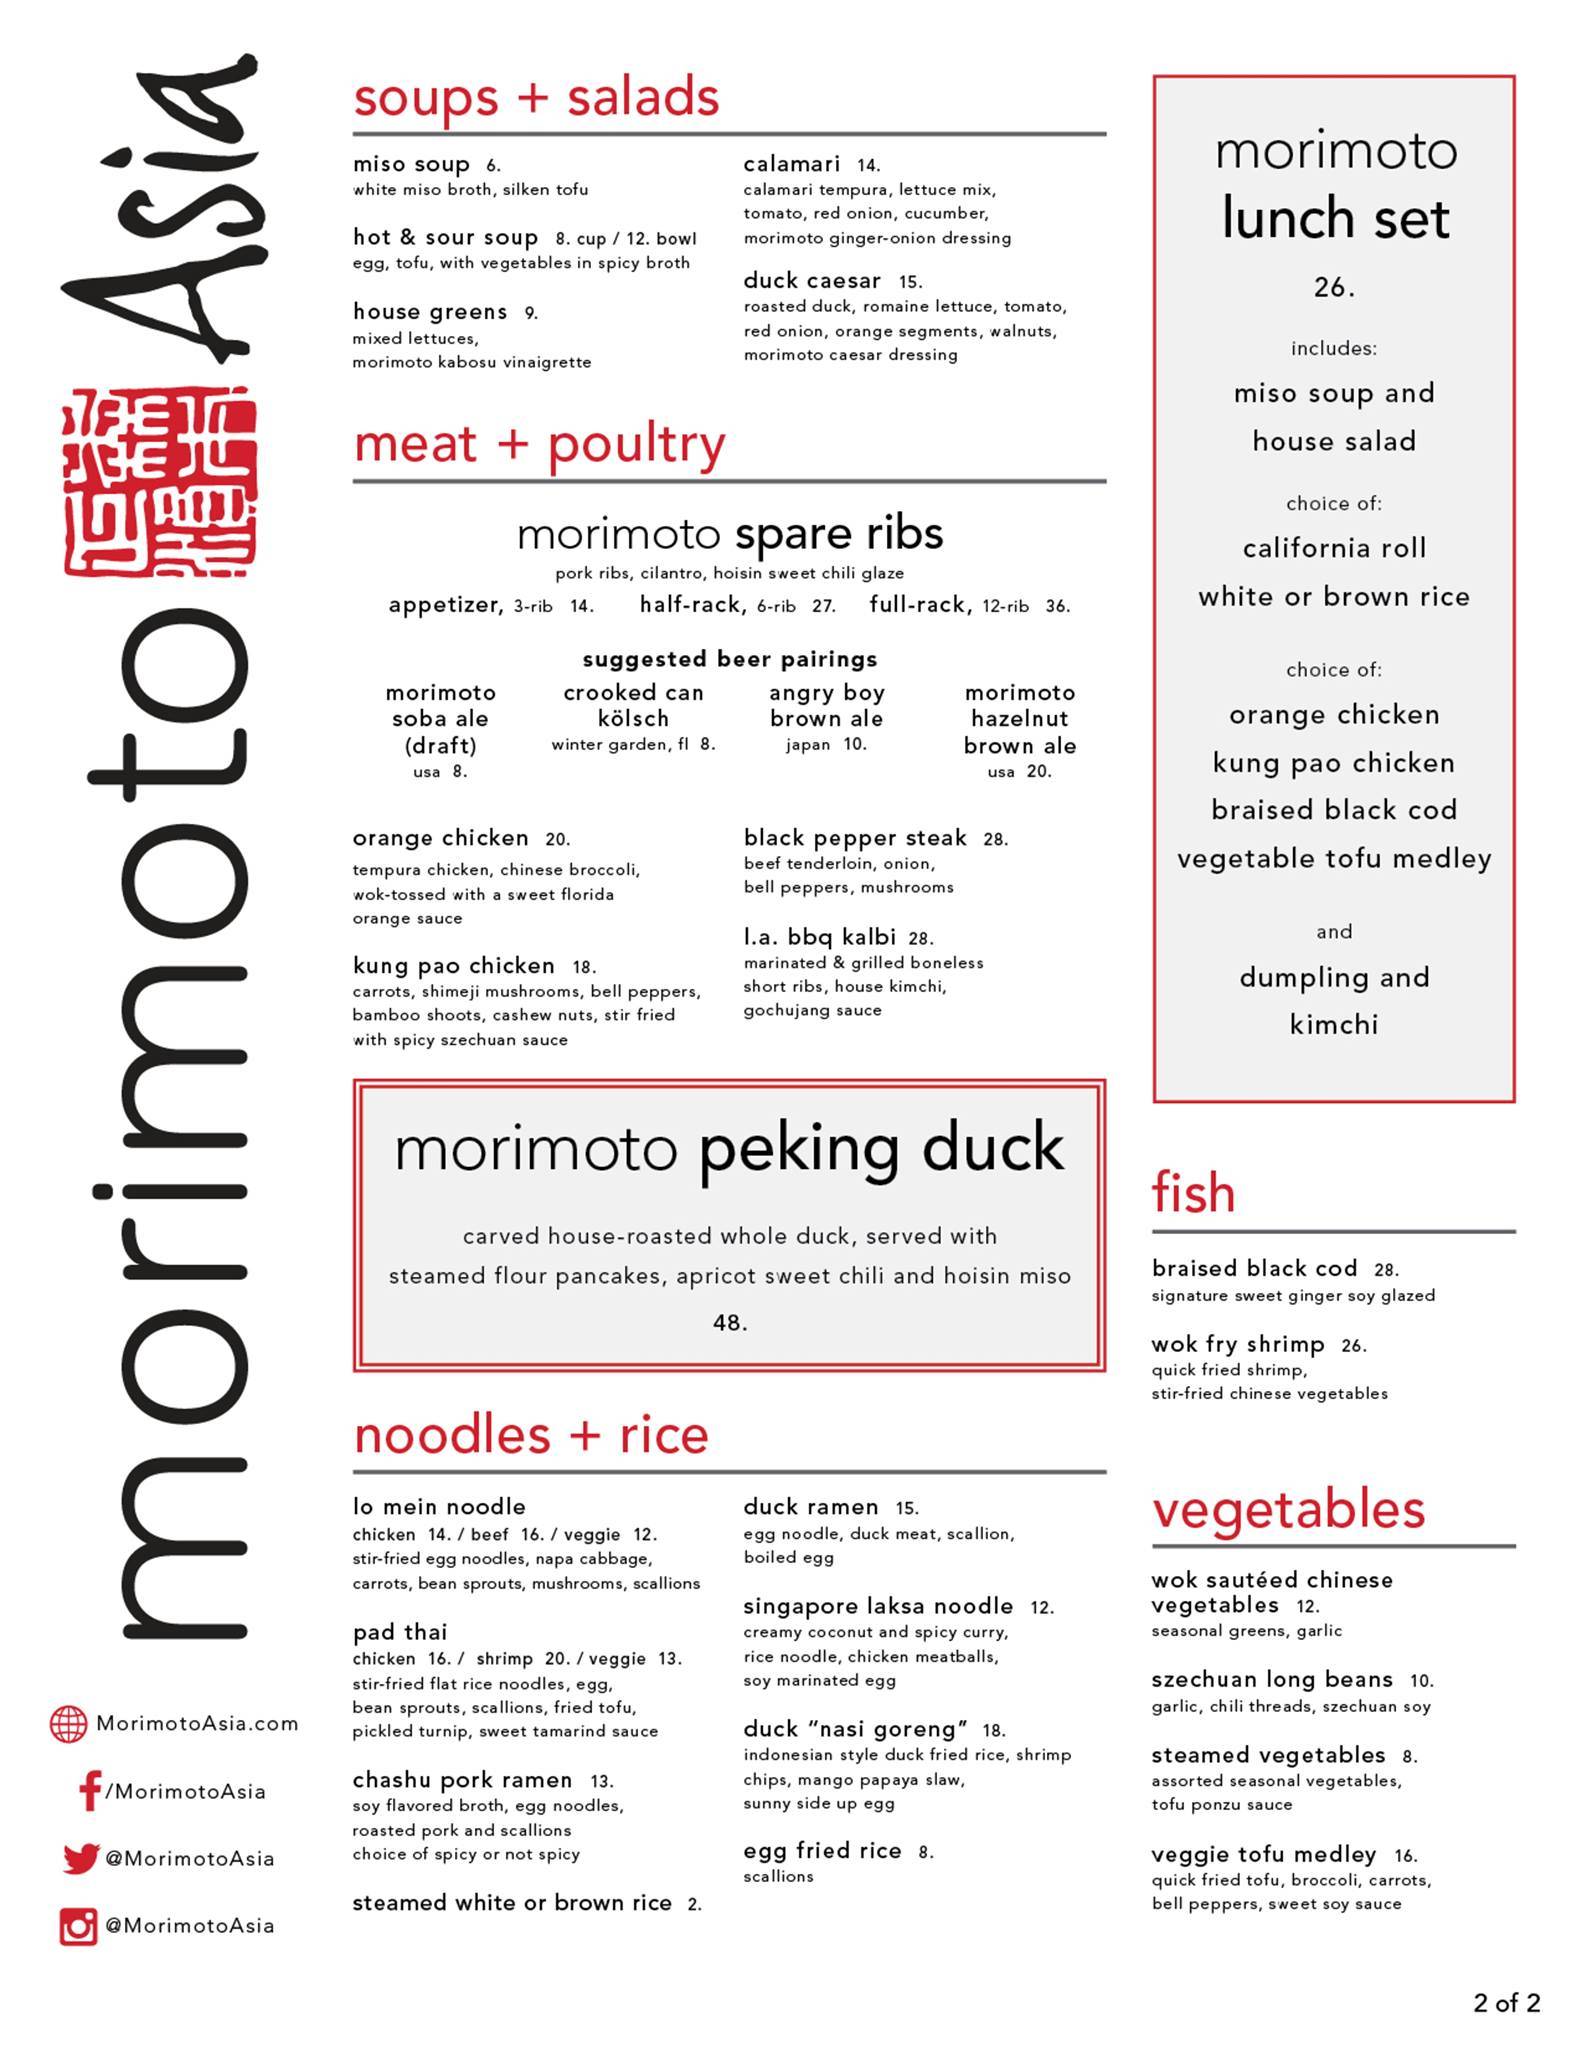 FIRST LOOK -  Full menu for Morimoto Asia - opening next week at Disney Springs